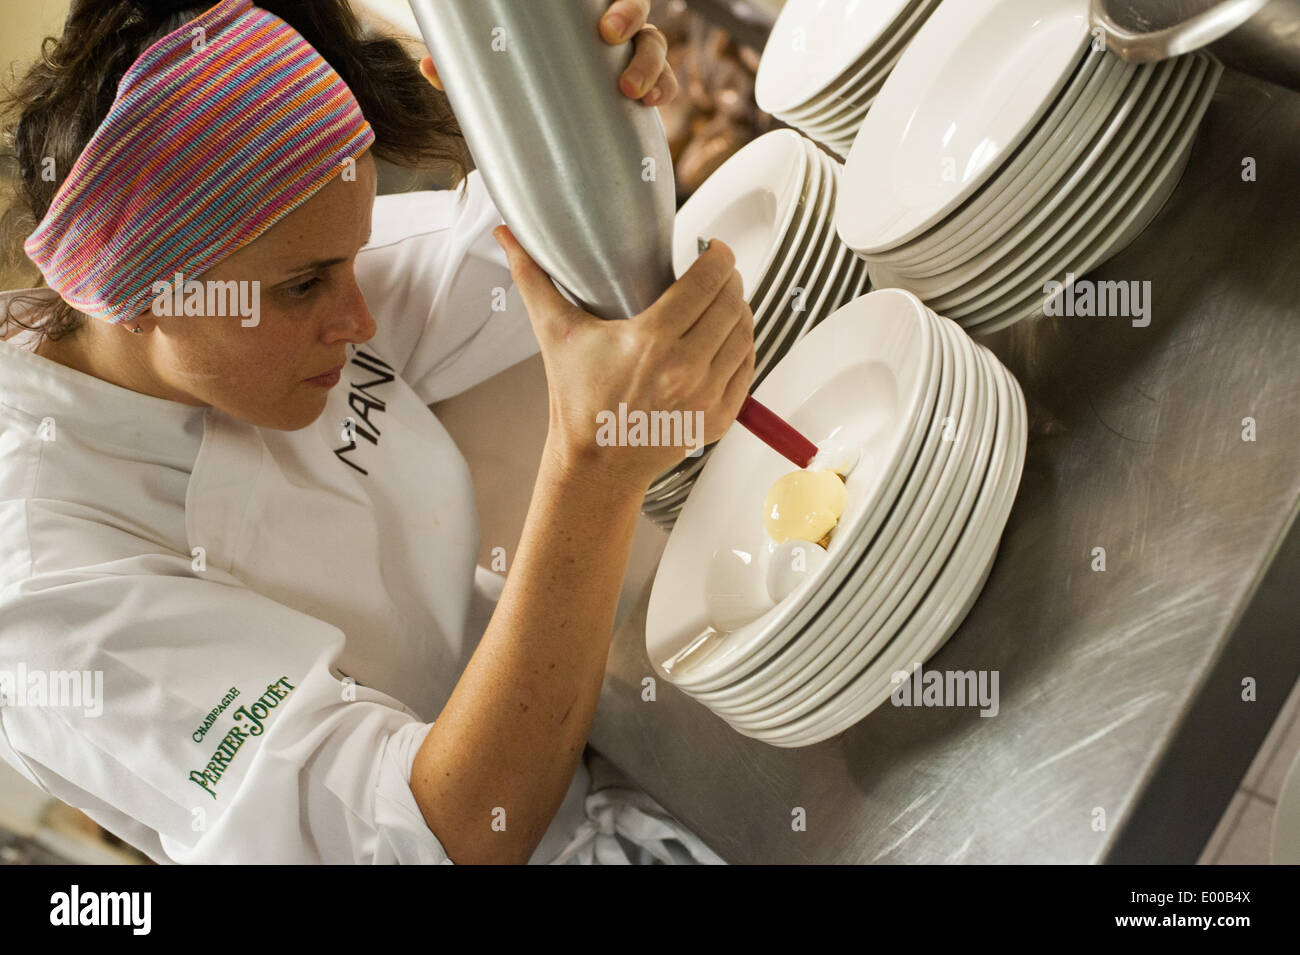 Brazilian-born chef Helena Rizzo has been named the 2014 Veuve Clicquot World’s Best Female Chef. Stock Photo